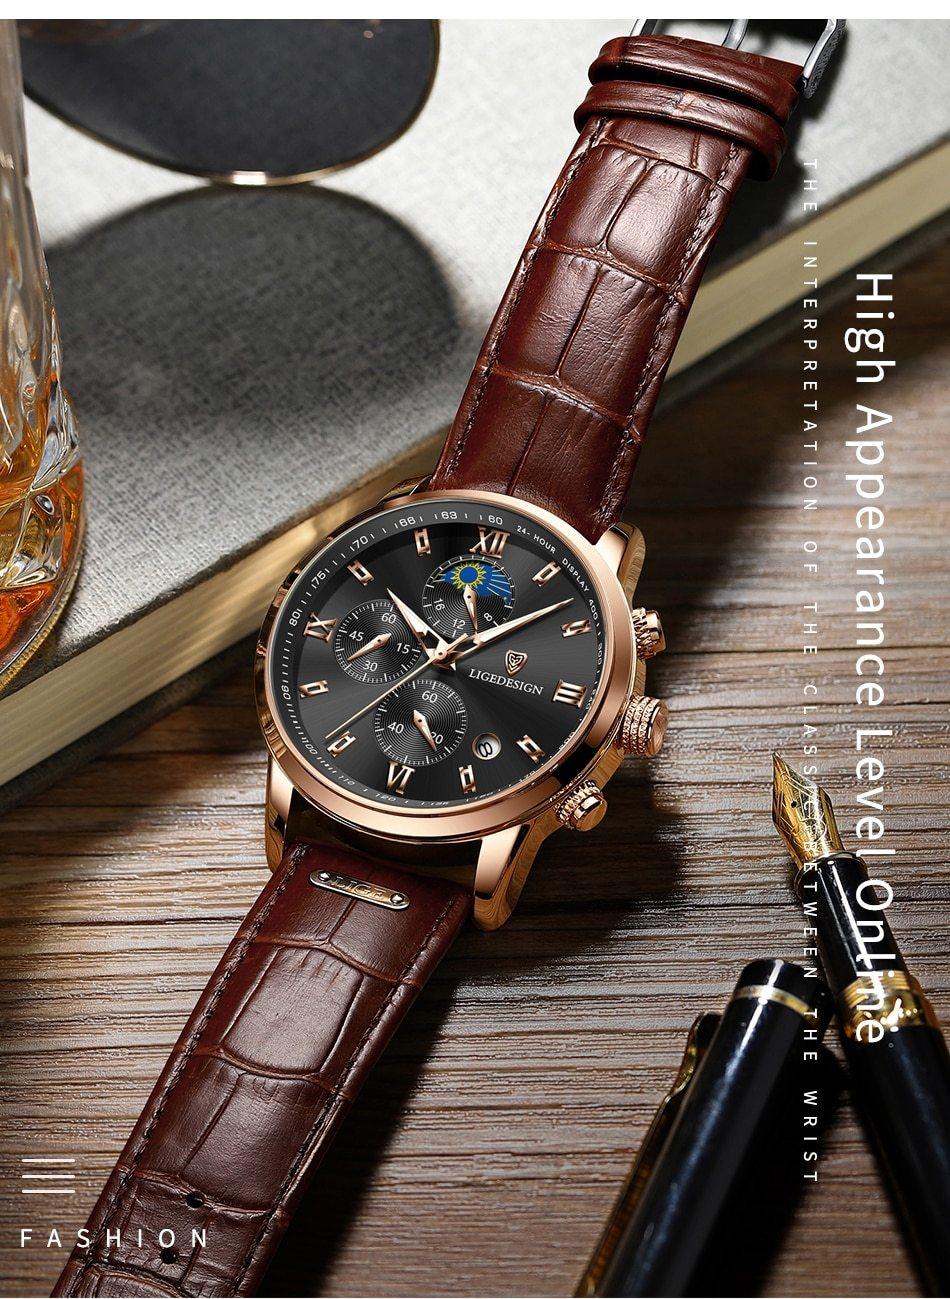 Top Luxury Brand Waterproof Sport Chronograph Quartz Wrist Watch with Leather Strap - The Jewellery Supermarket